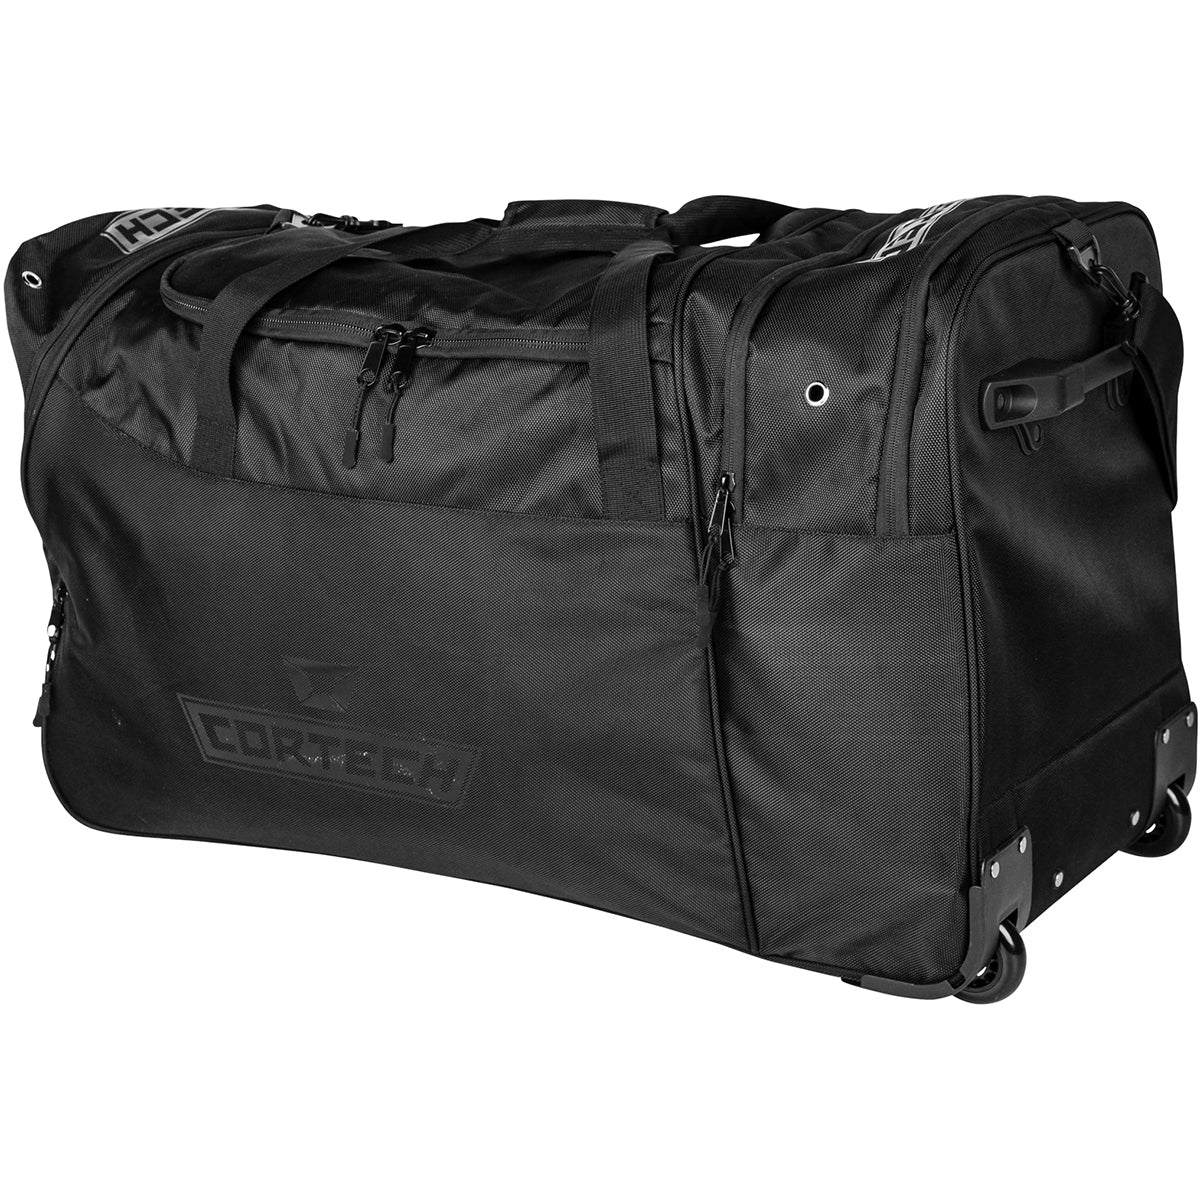 Cortech Tracker Roller Gear Adult Duffle Bags-8216